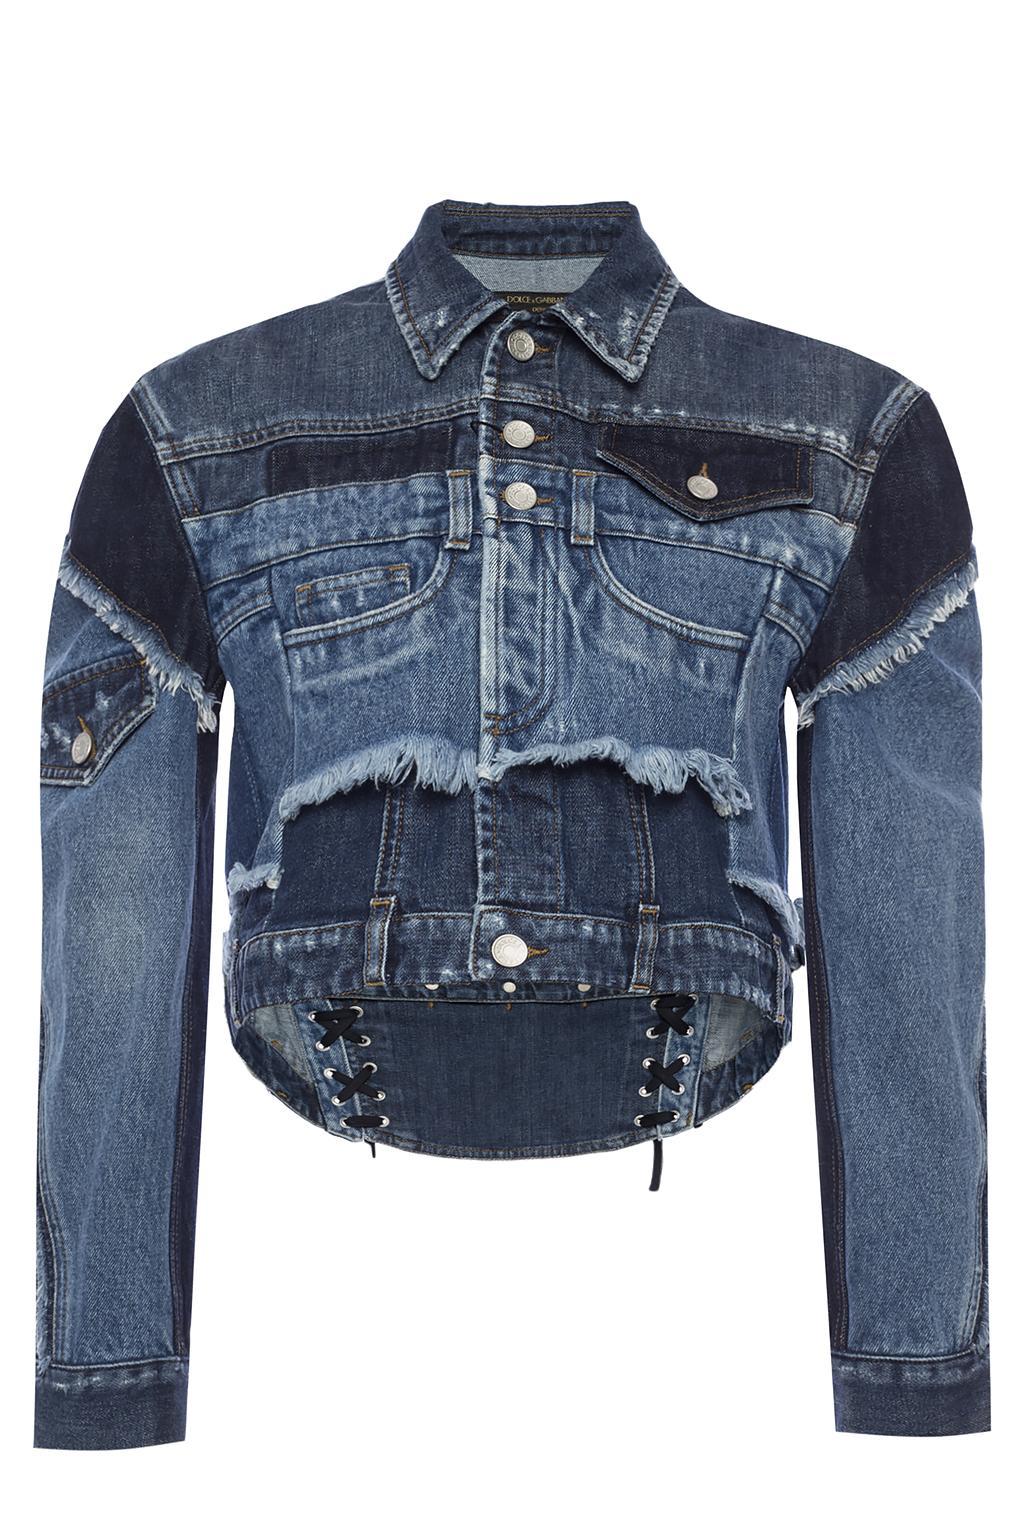 Dolce & Gabbana Raw-edge Denim Jacket in Blue - Lyst